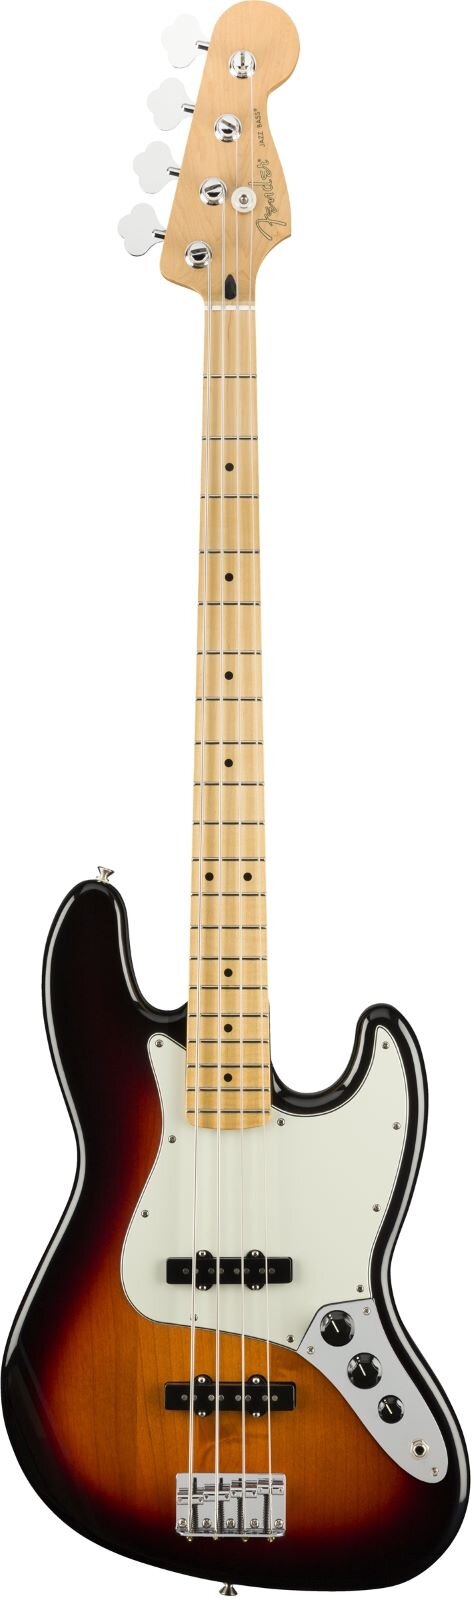 Fender Player Jazz Bass Maple Griffbrett 3-Color Sunburst : photo 1